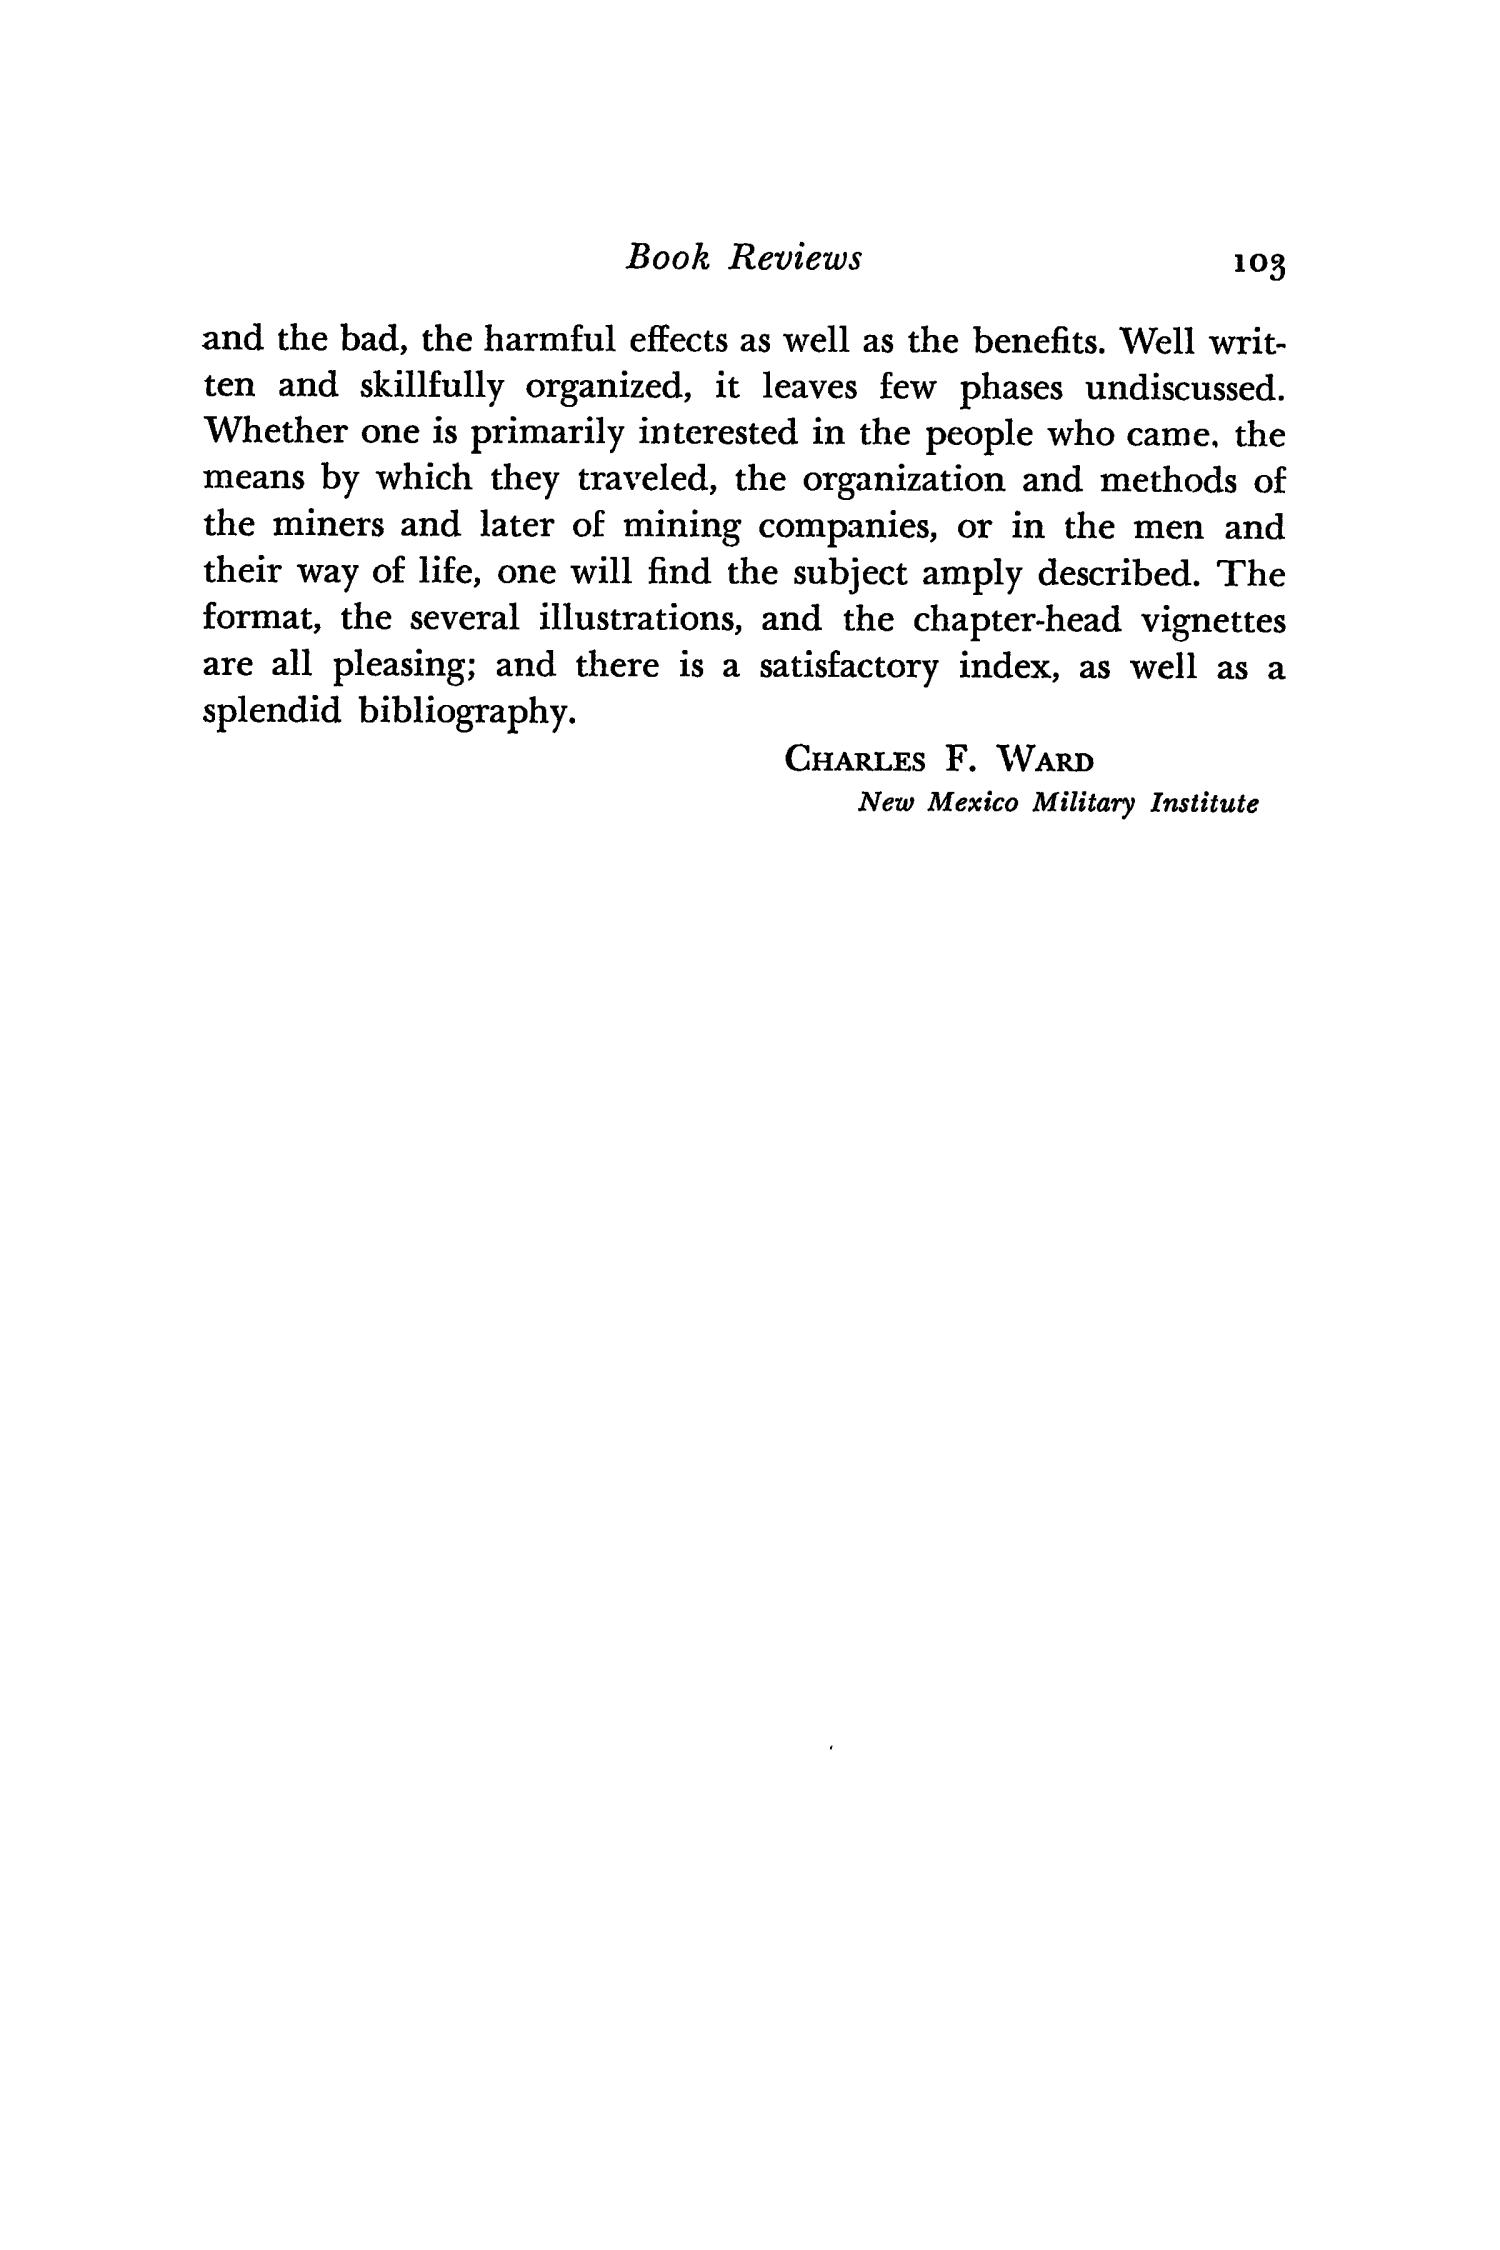 The Southwestern Historical Quarterly, Volume 53, July 1949 - April, 1950
                                                
                                                    103
                                                